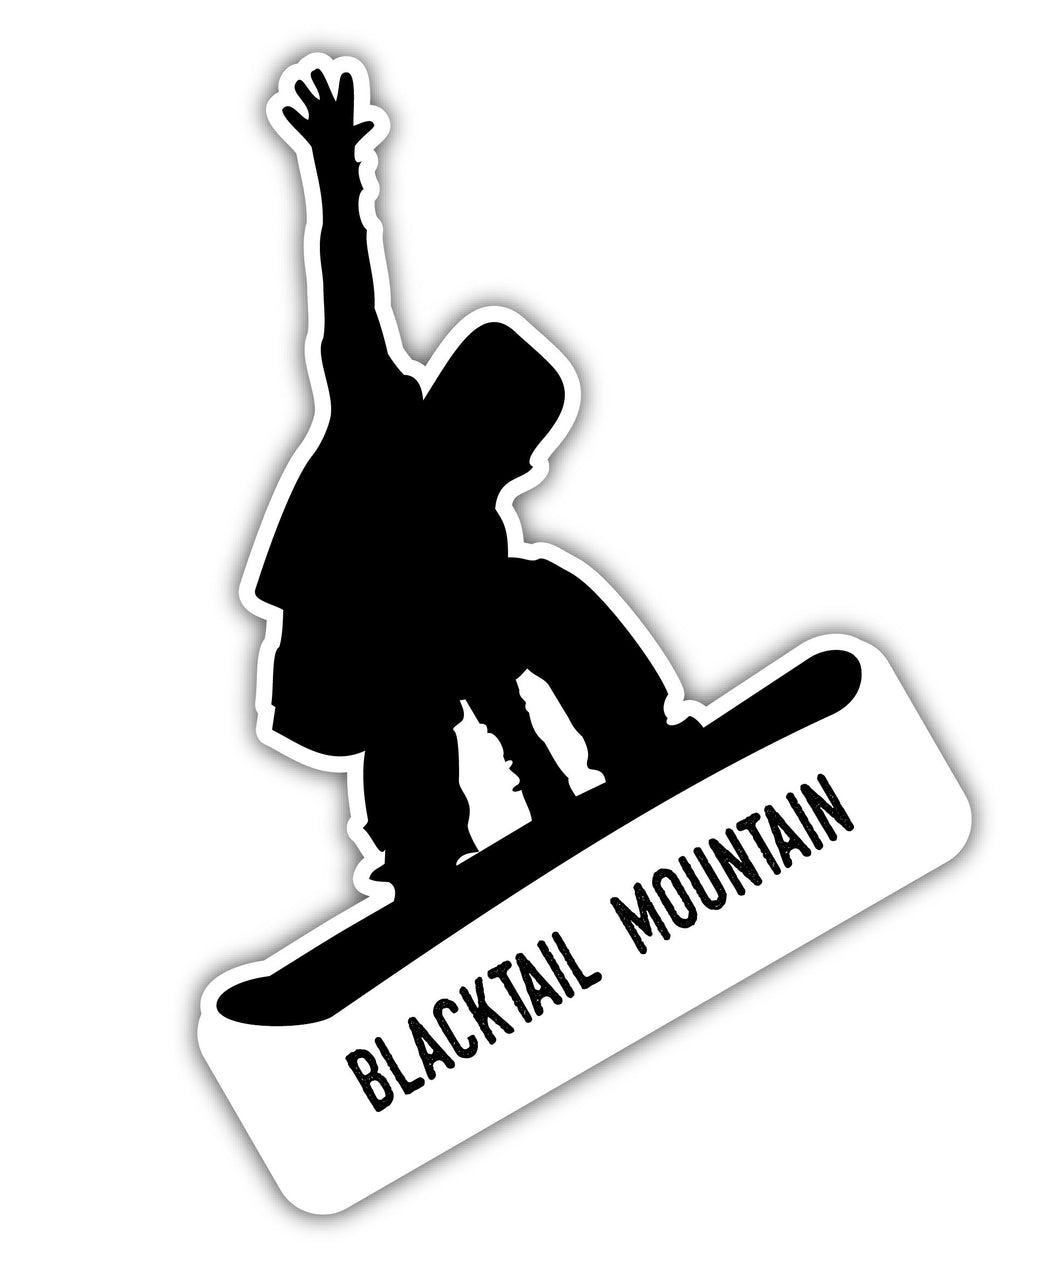 Blacktail Mountain Montana Ski Adventures Souvenir 4 Inch Vinyl Decal Sticker Board Design